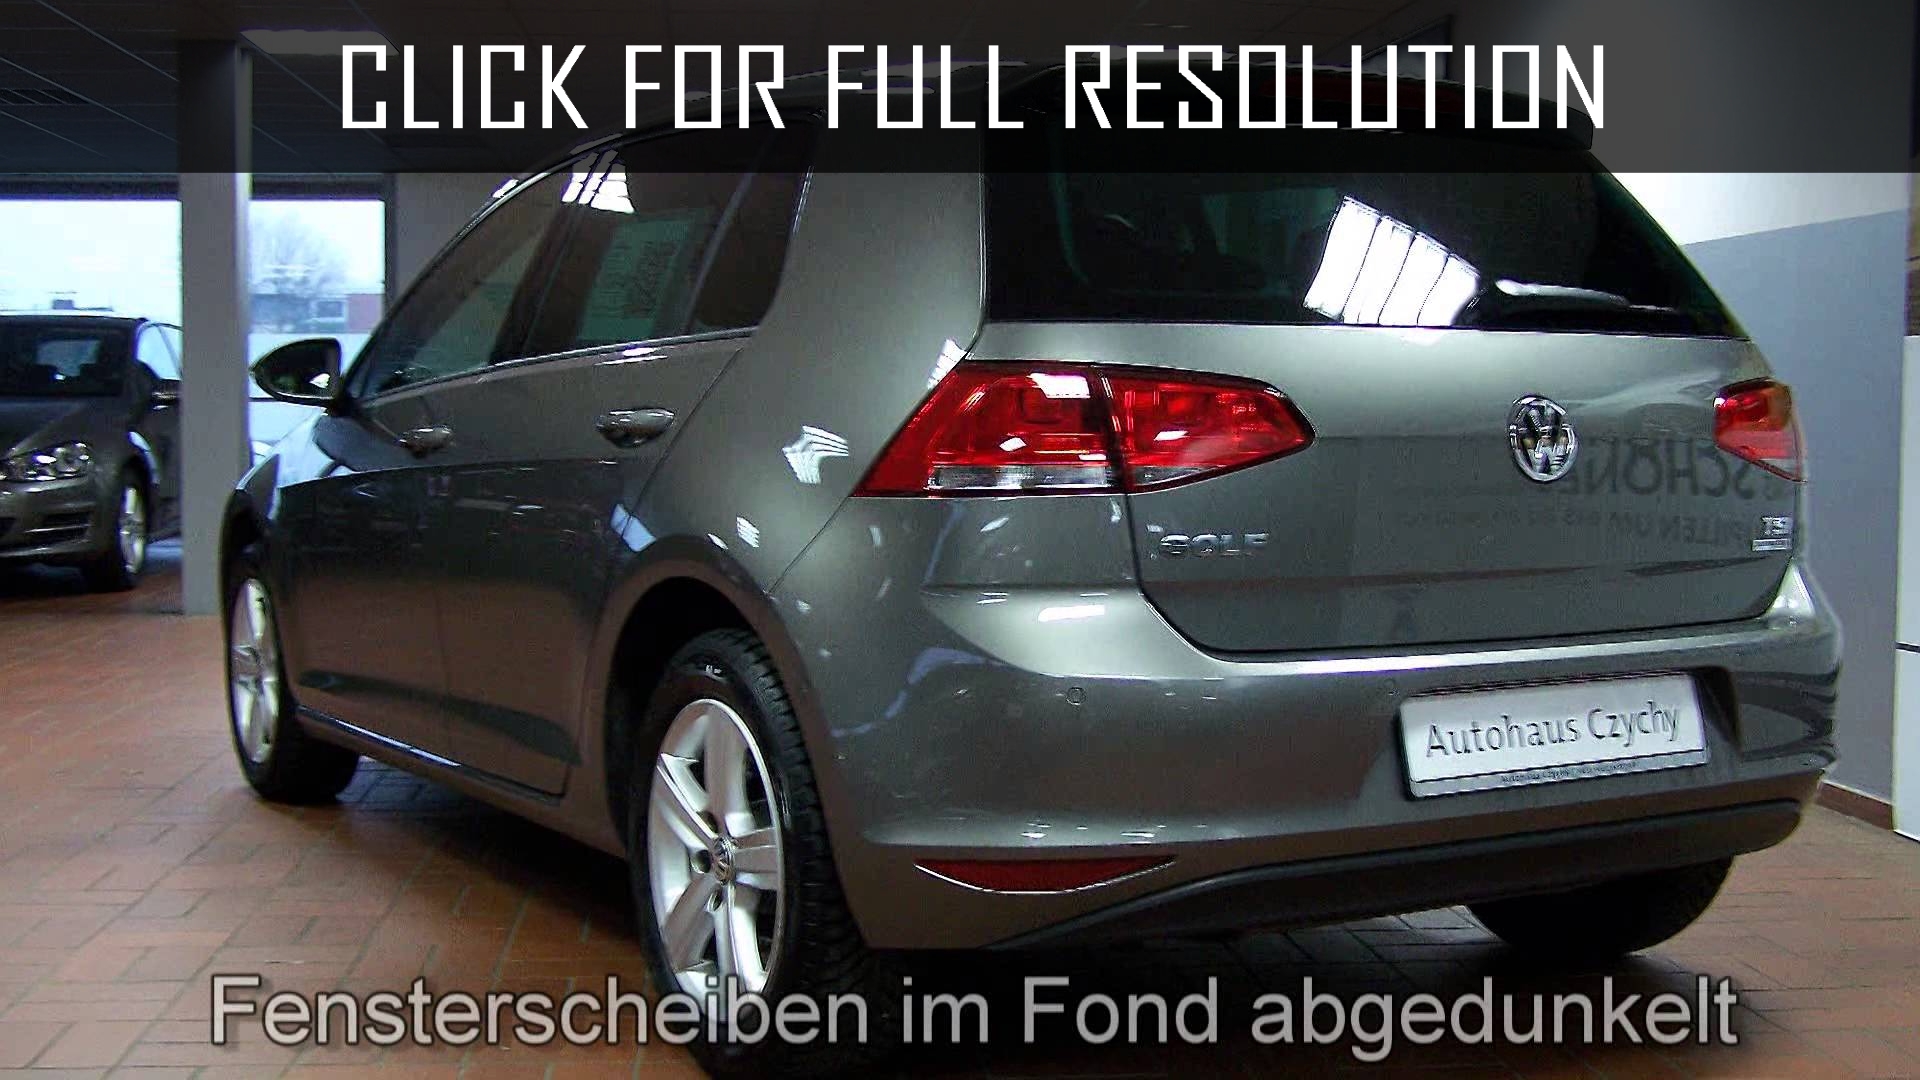 Volkswagen Golf Limestone Grey